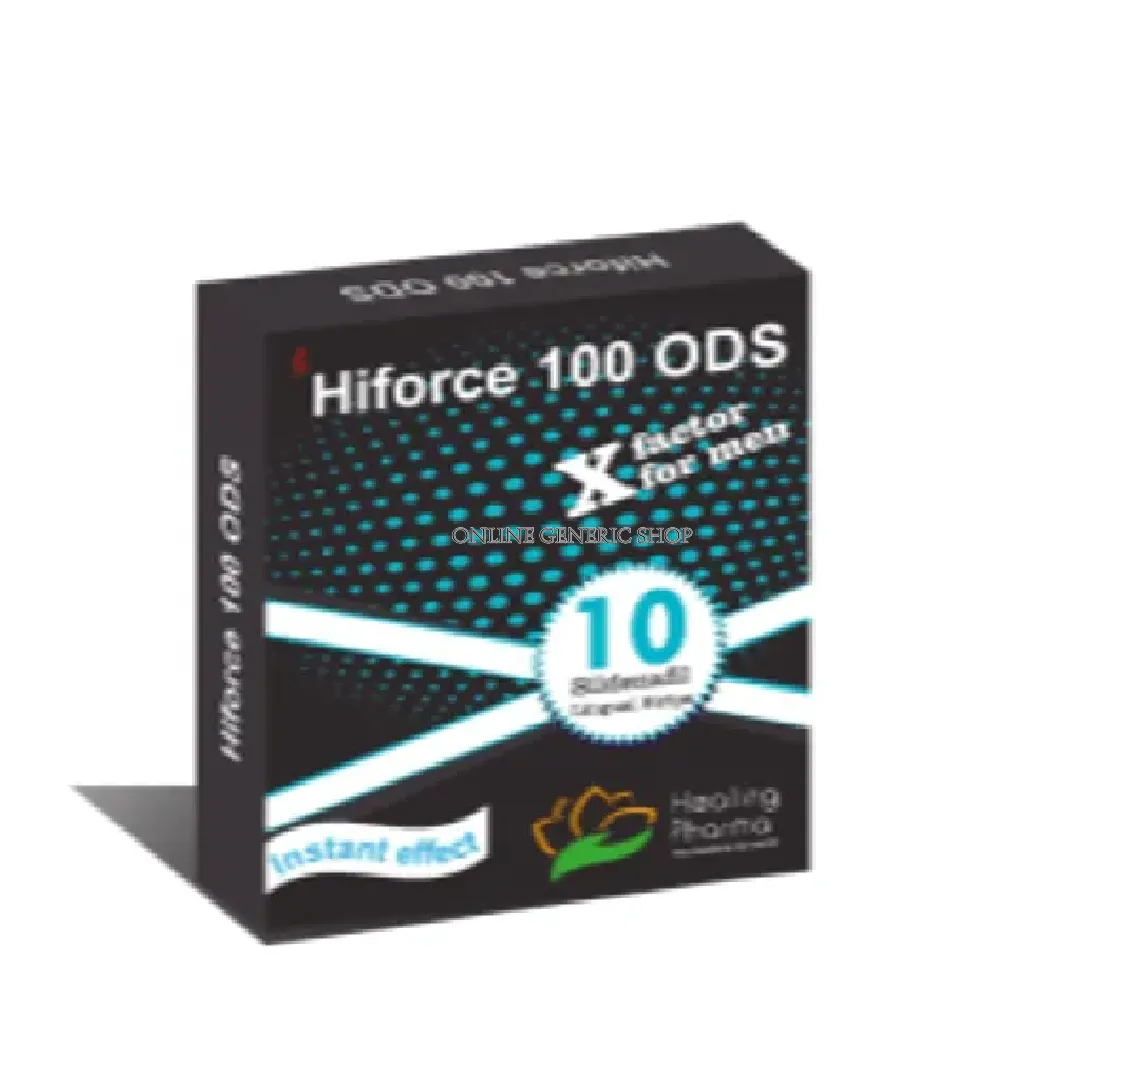 Hiforce 100 ODS image